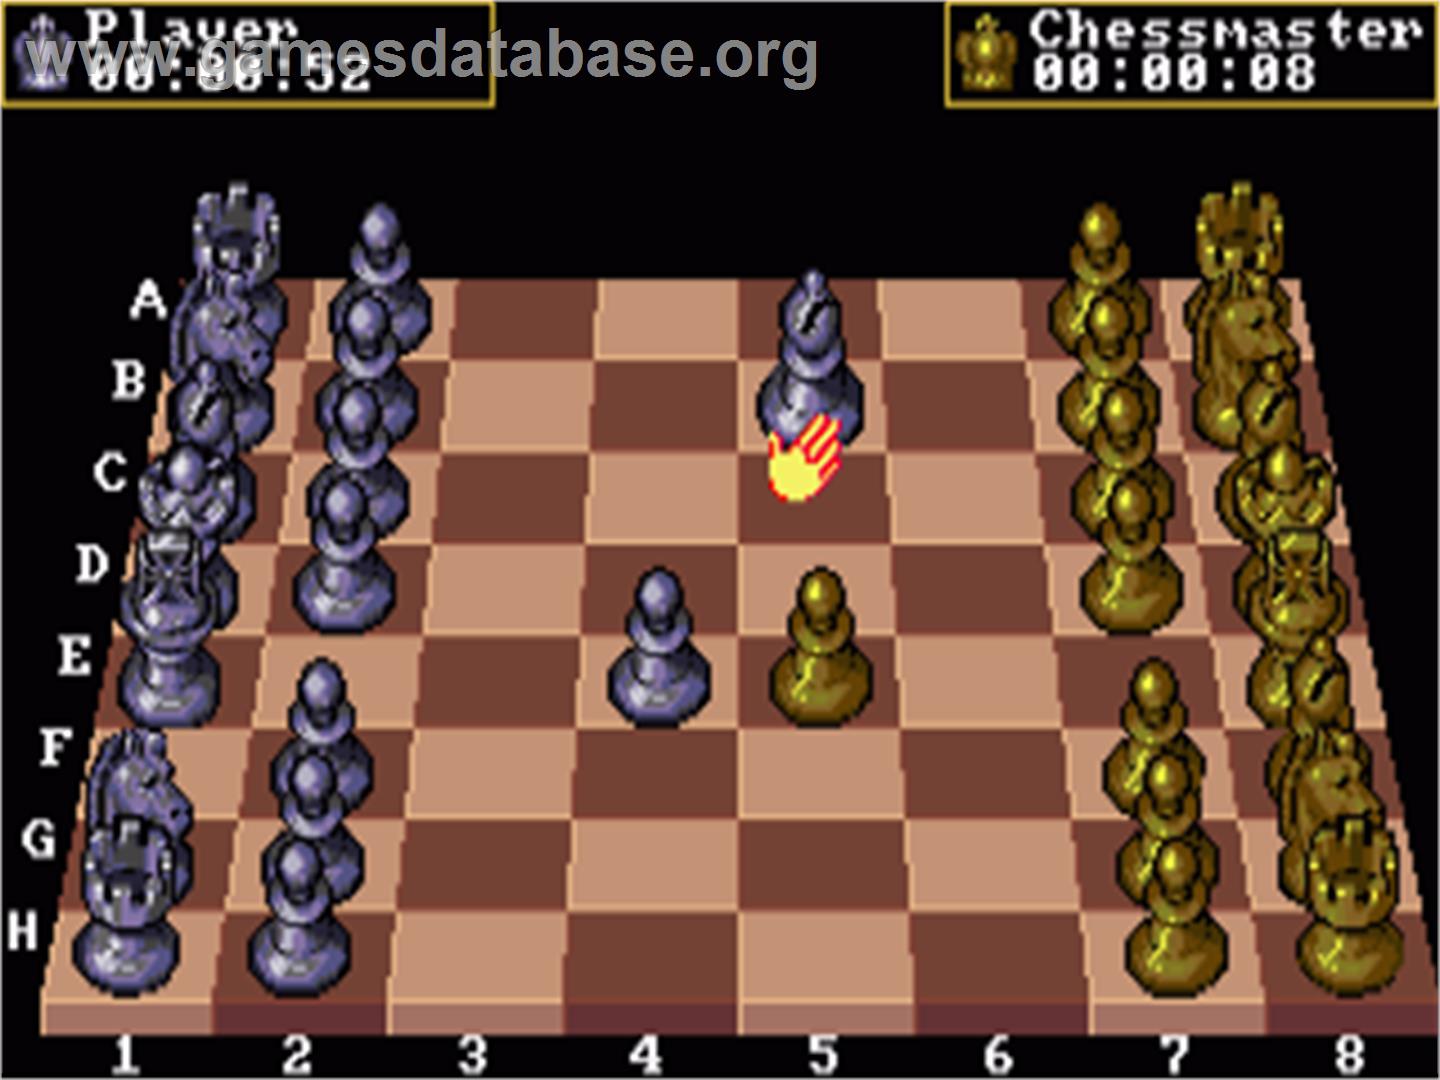 Chessmaster 2000 - Commodore Amiga - Artwork - In Game